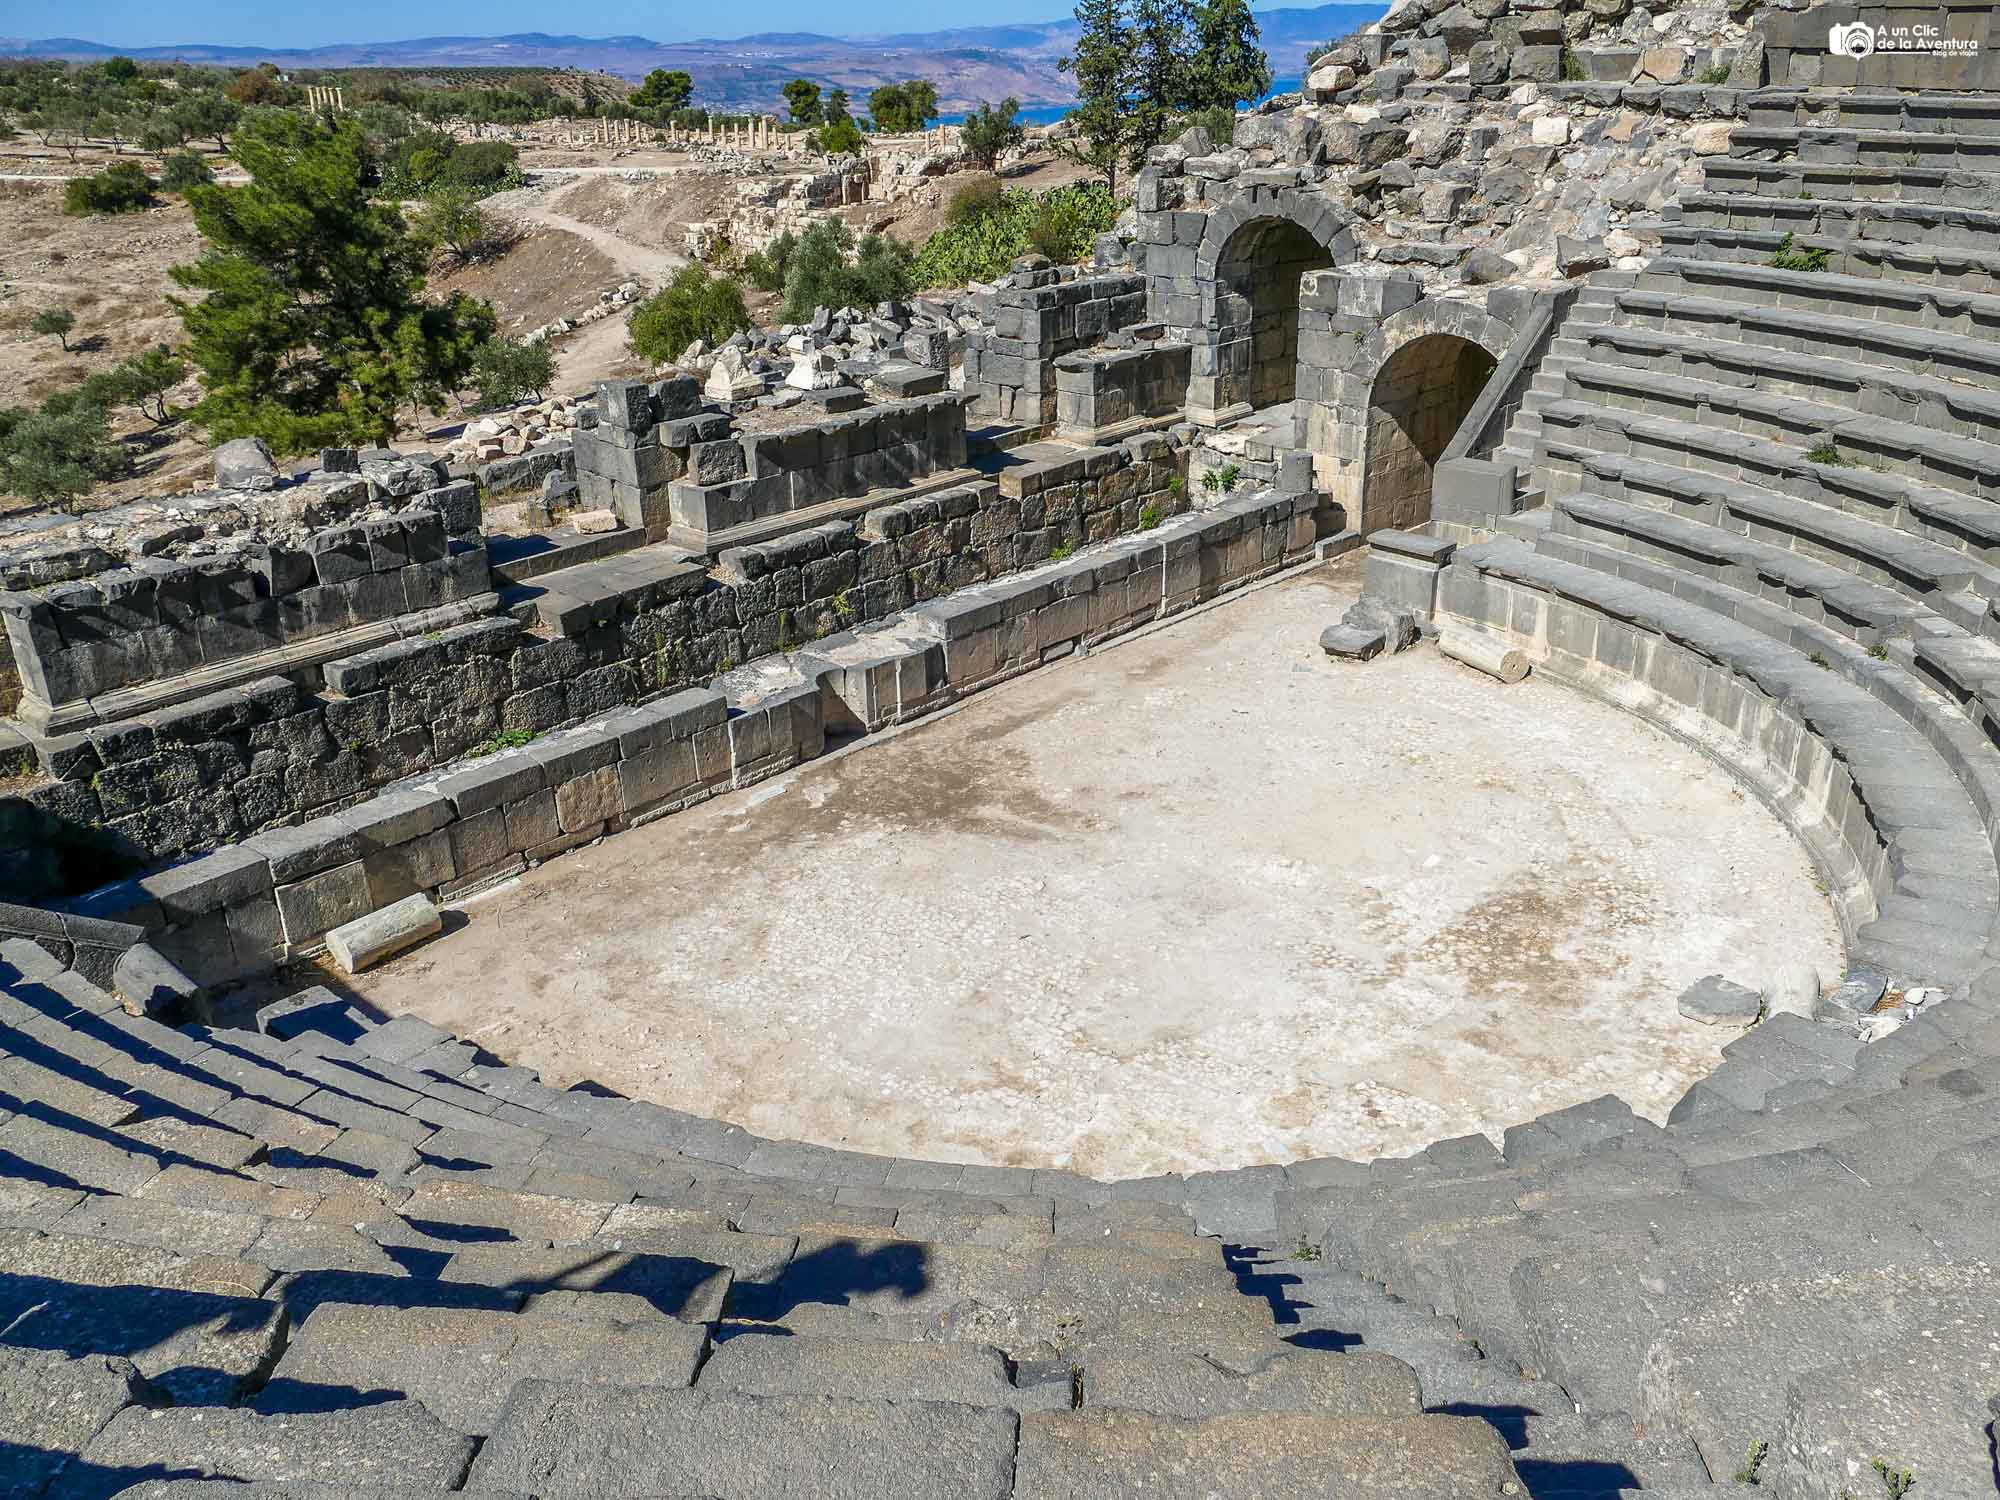 Teatro romano de Umm Qais, que ver en Jordania